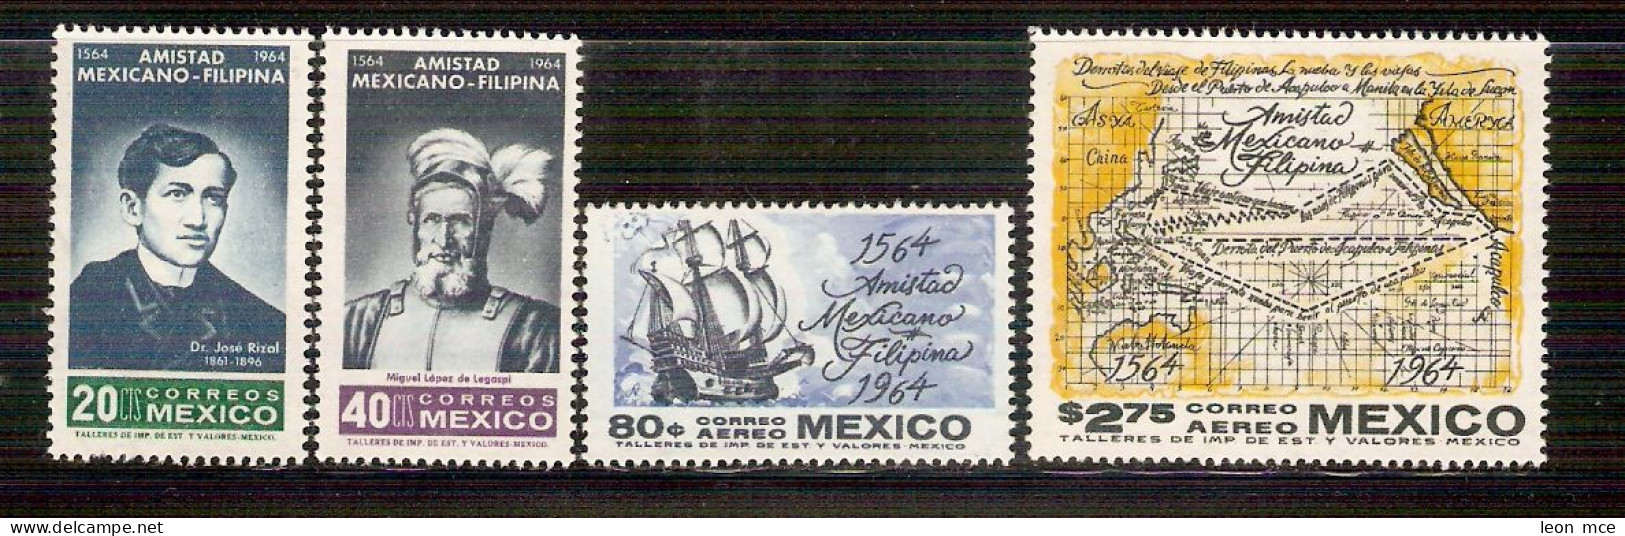 1964 MÉXICO 400 AÑOS AMISTAD MEX. FILIPINAS Sc. 956-957, C300-C301 (4) MNH. 400 YEARS OF MEXICO-PHILIPPINES FRIENDSHIP - Messico